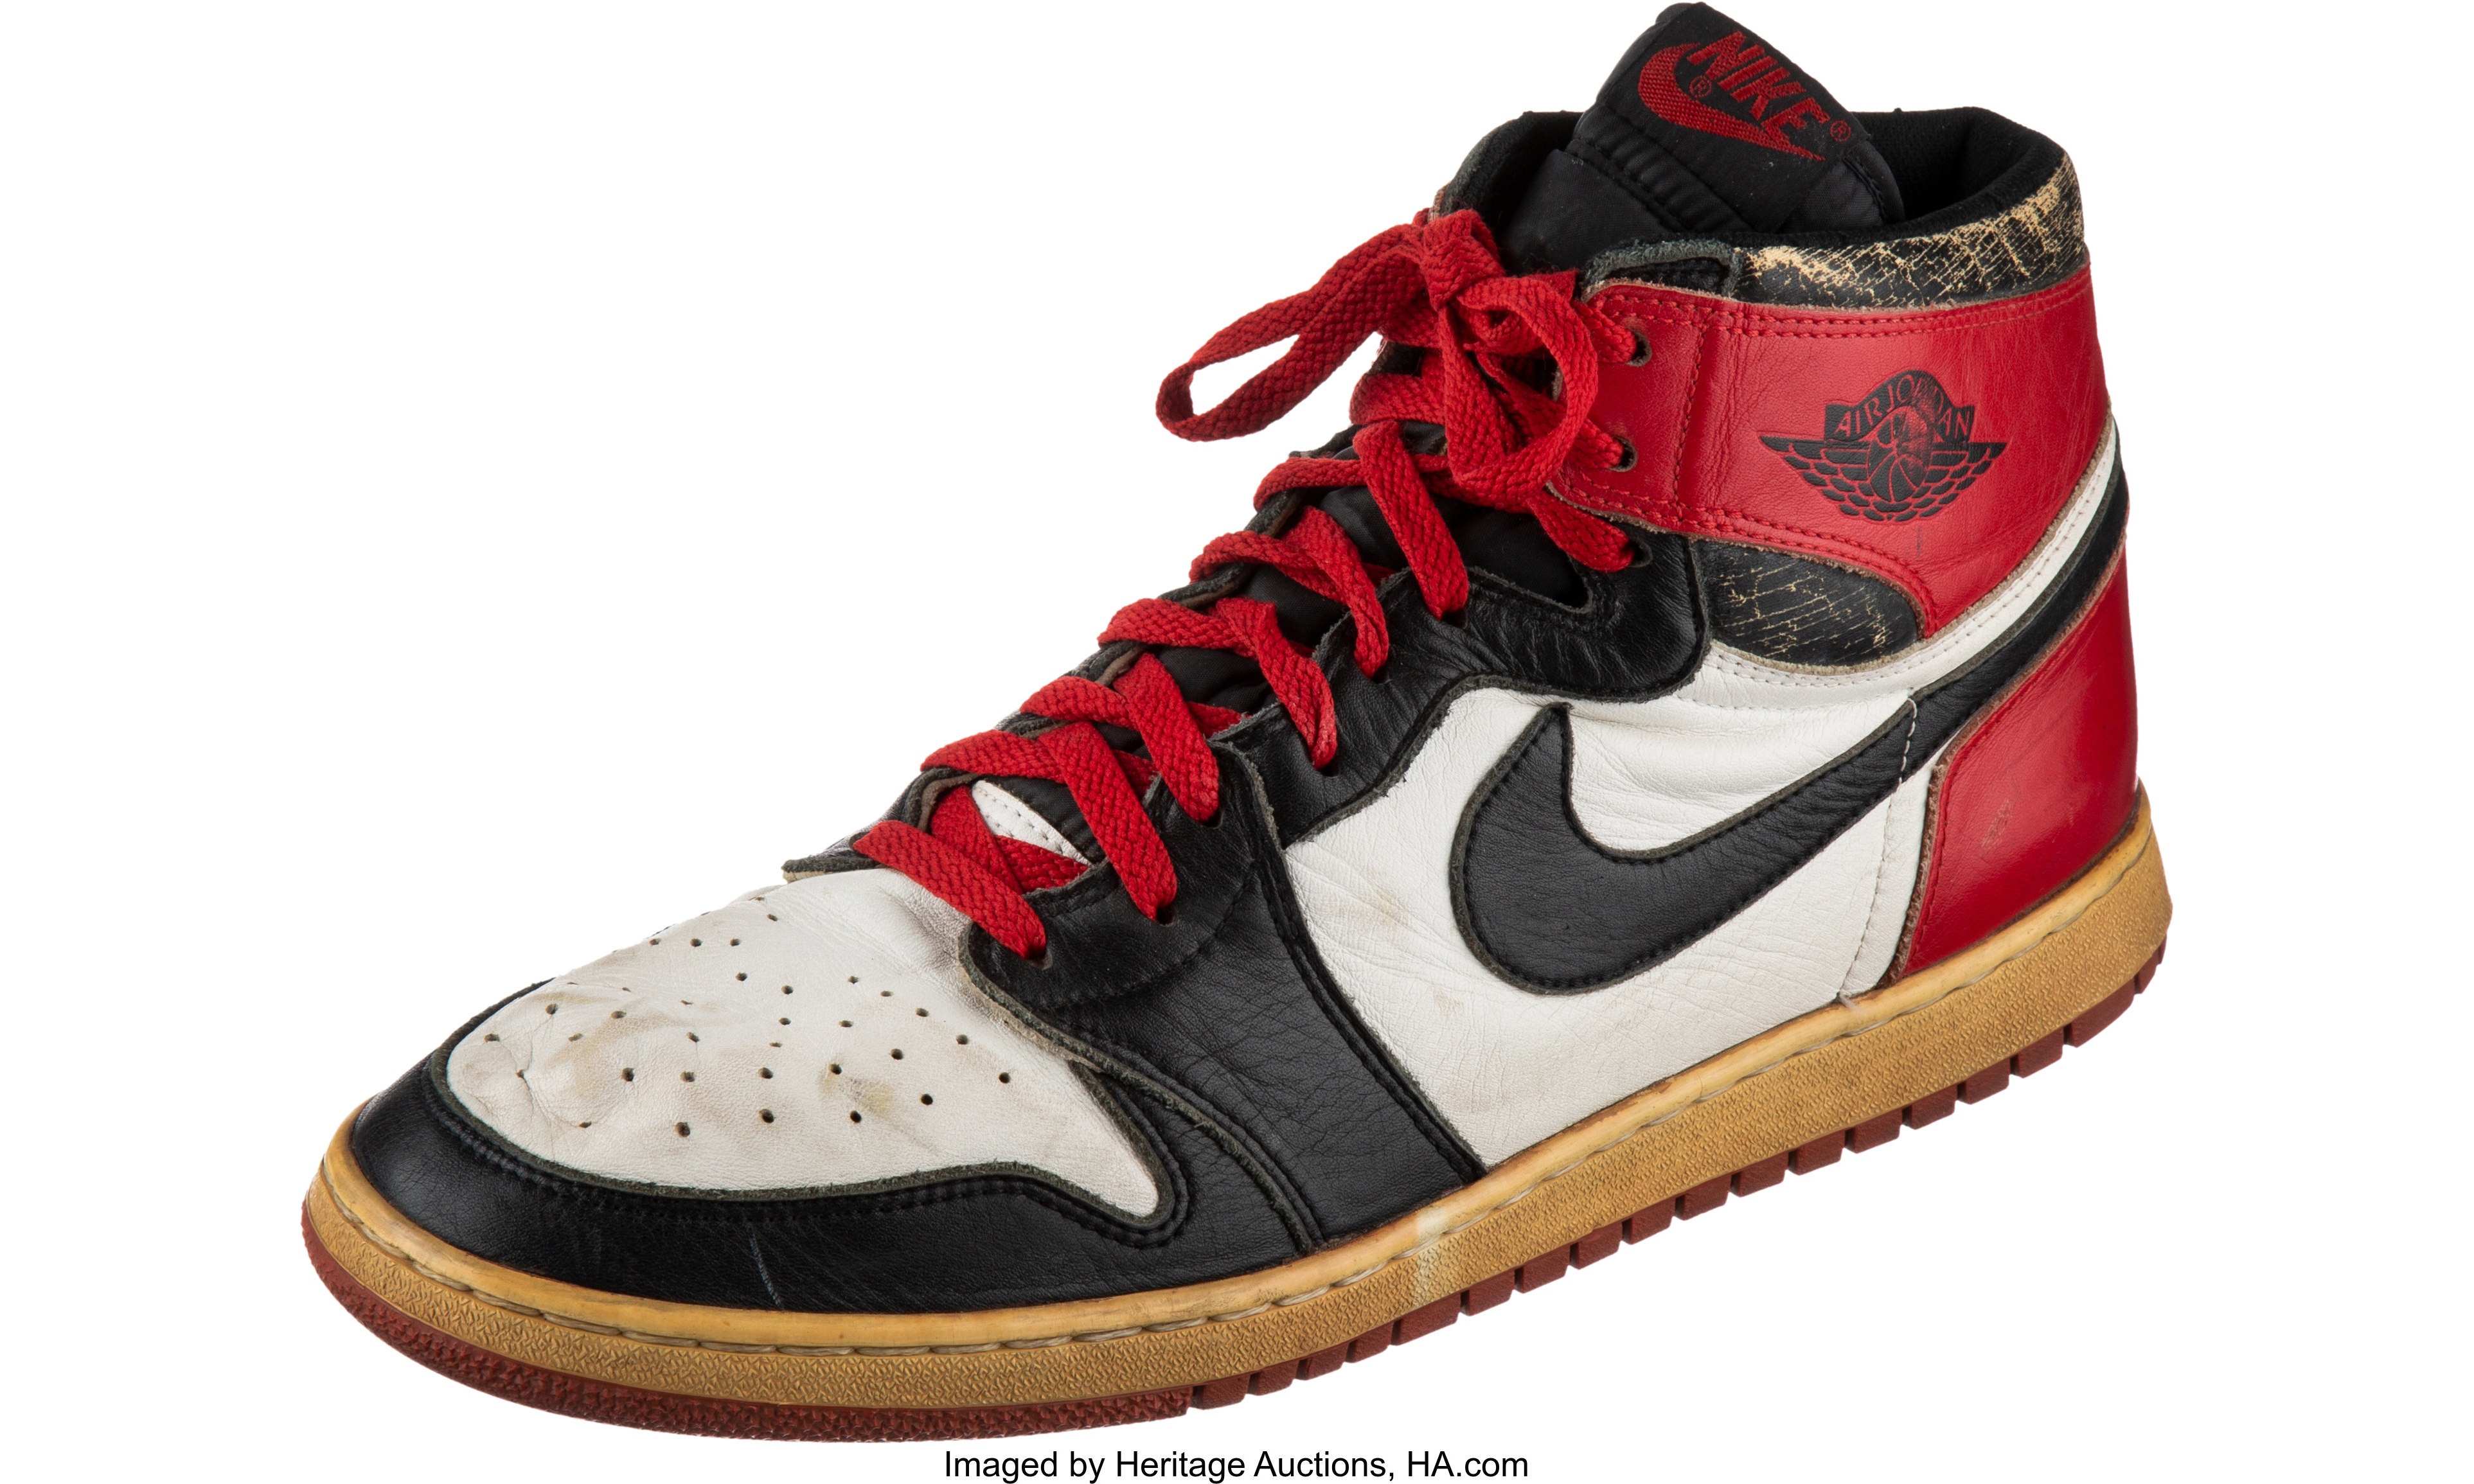 Sneaker 瑰宝，乔丹新秀赛季亲着 Air Jordan I “黑脚趾” 正在拍卖